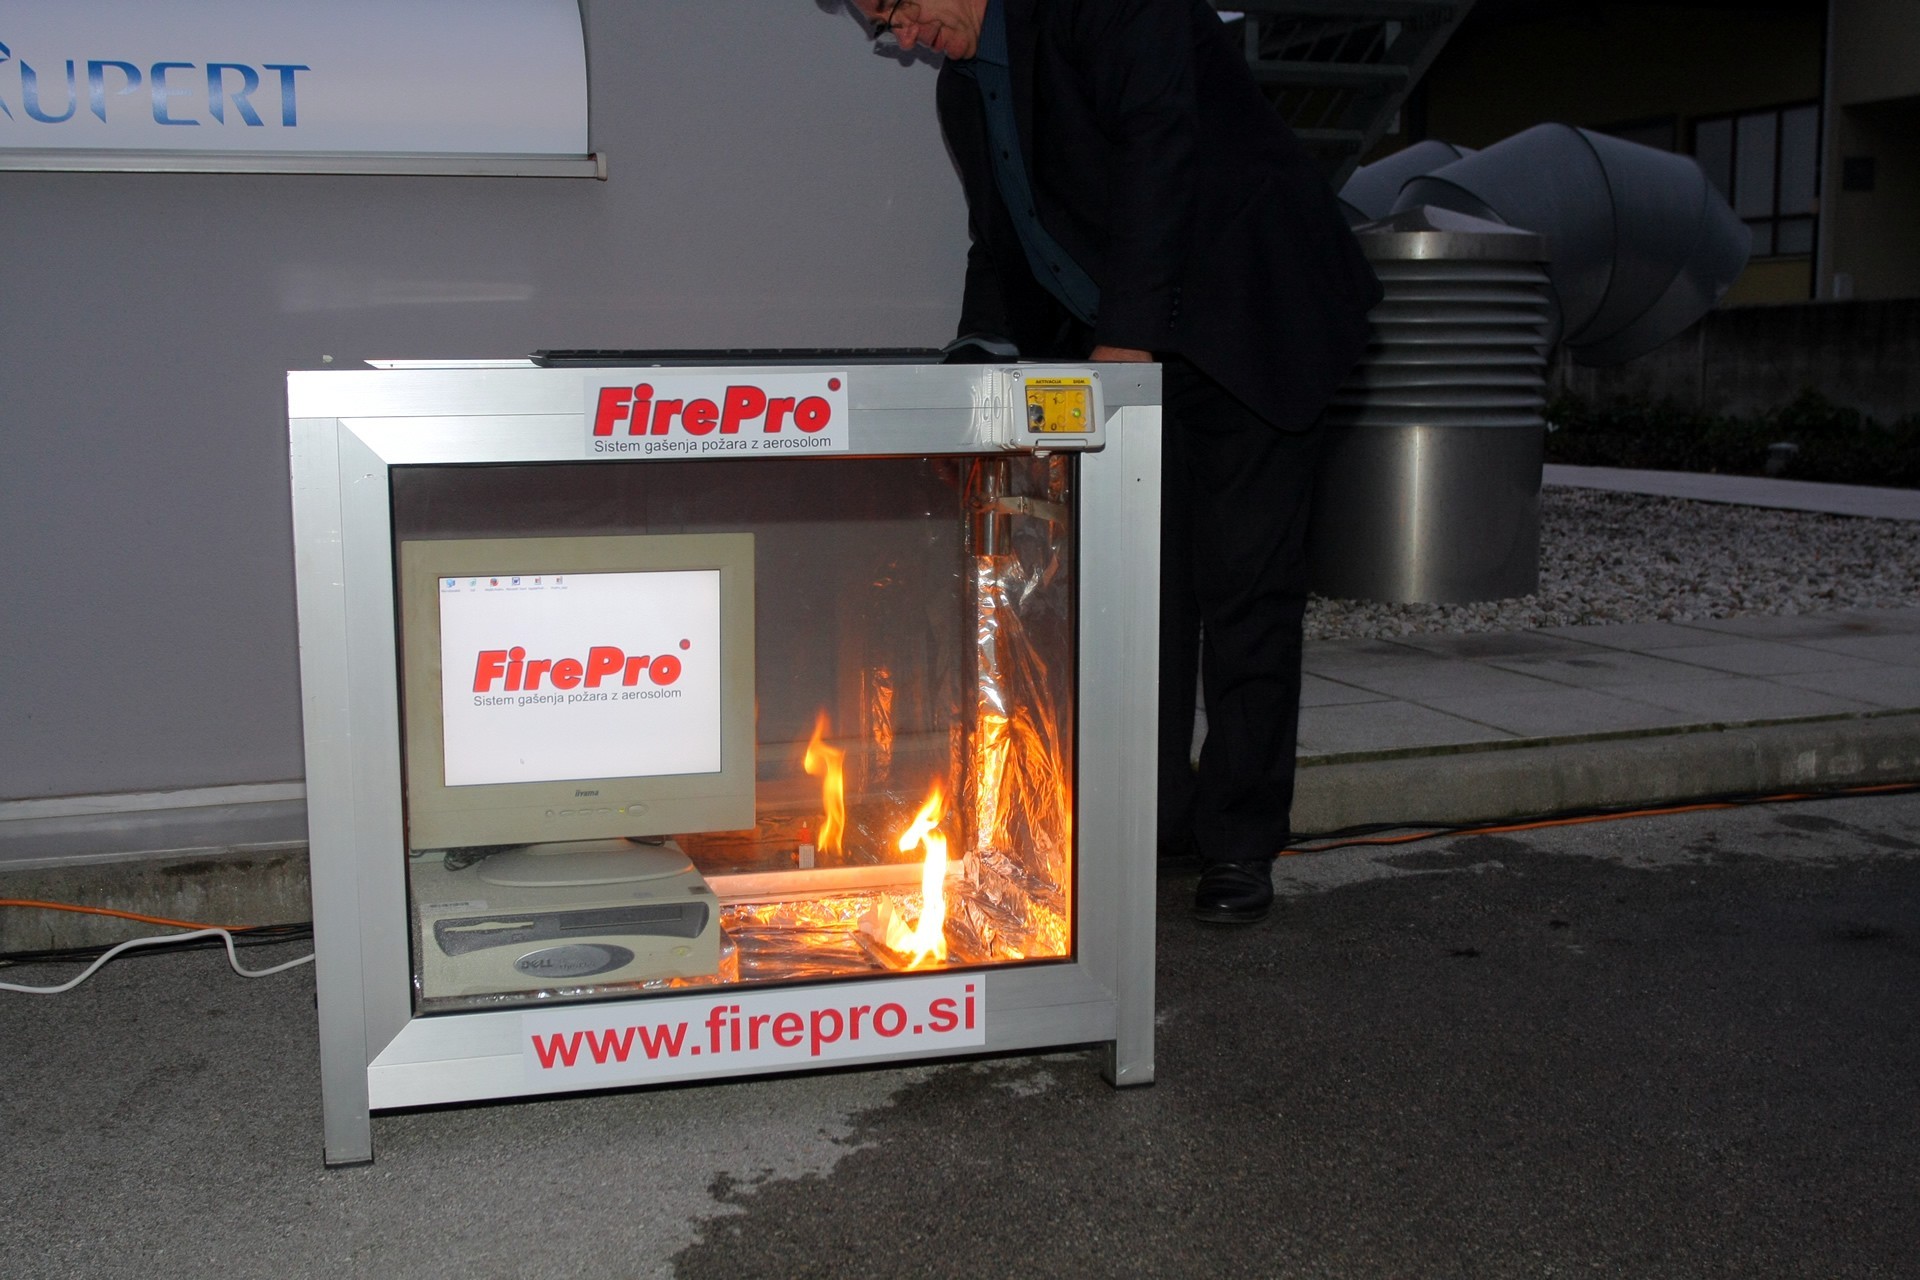 DB Technic represents FirePro in Slovenia